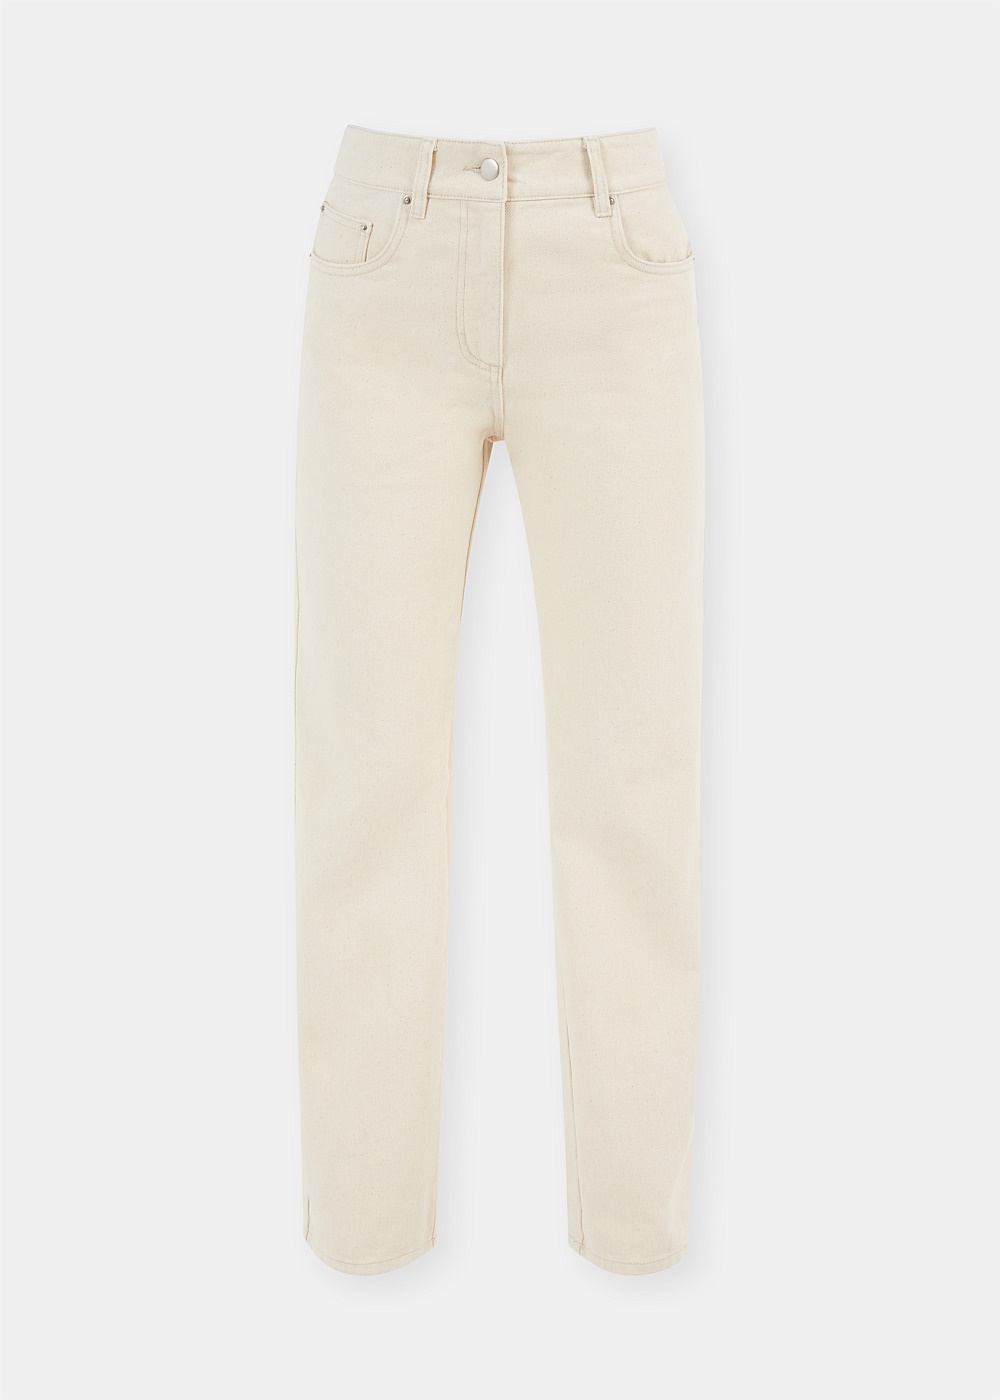 Shop Wynn Hamlyn Classic Ivory Jeans | Harrolds Australia